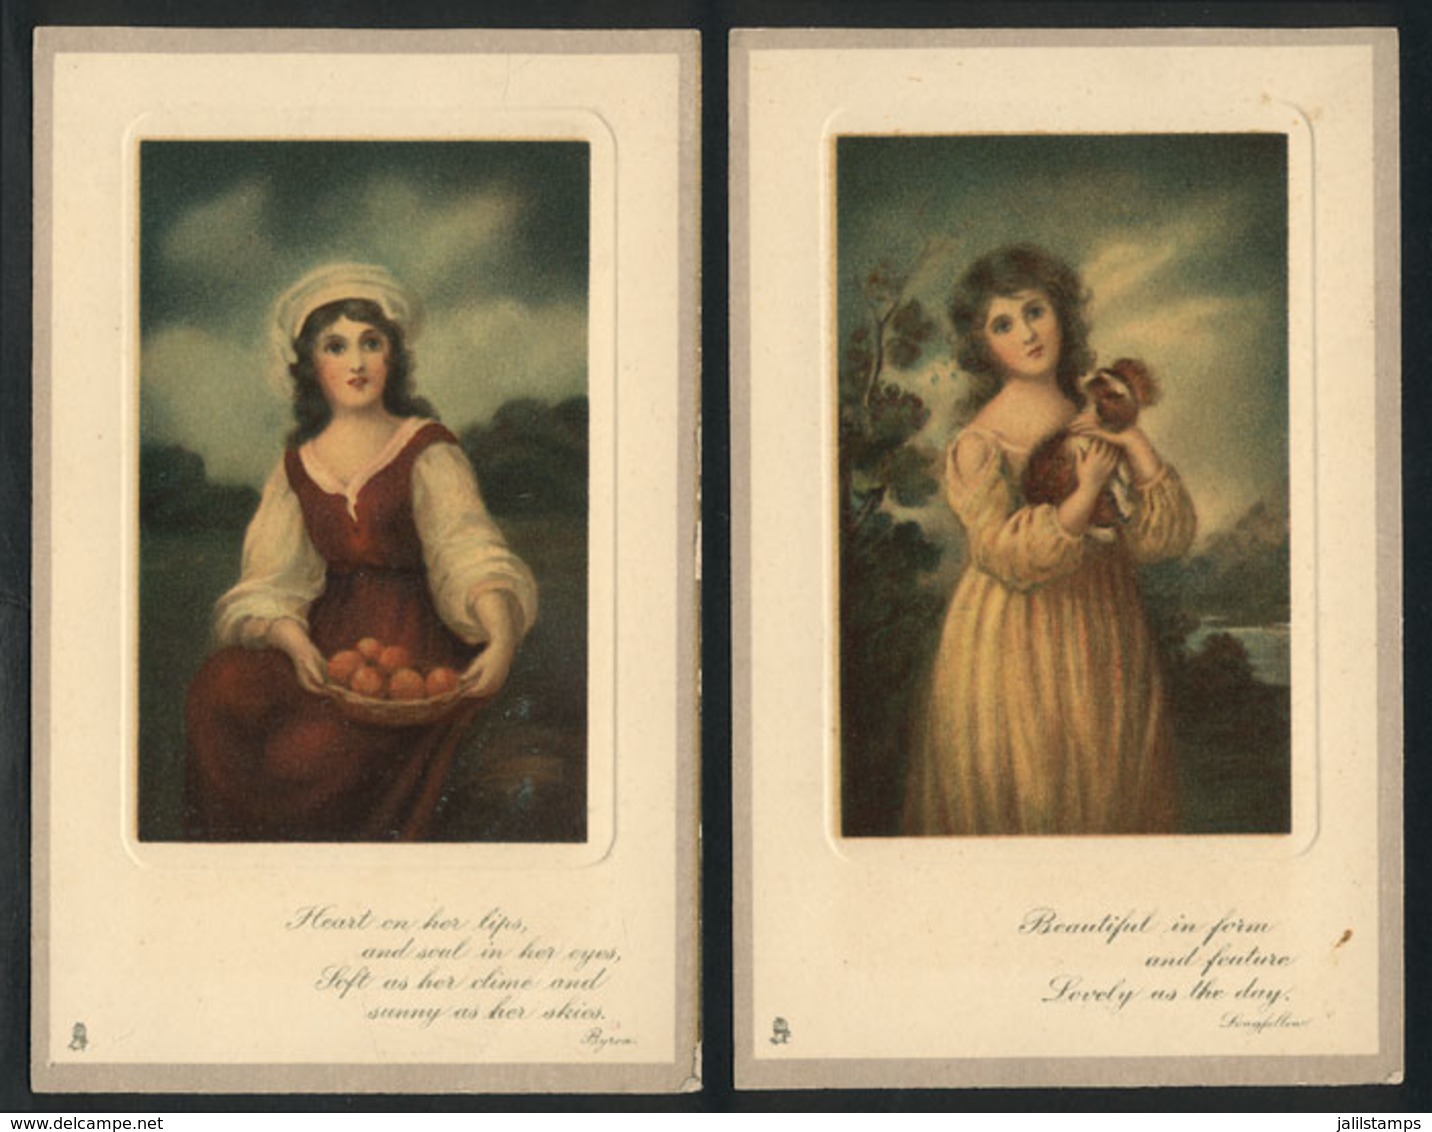 1558 WORLDWIDE: Beautiful Women, 2 Old PCs, Ed. Raphael Tuck, Pastel Series, VF Quality - Zonder Classificatie